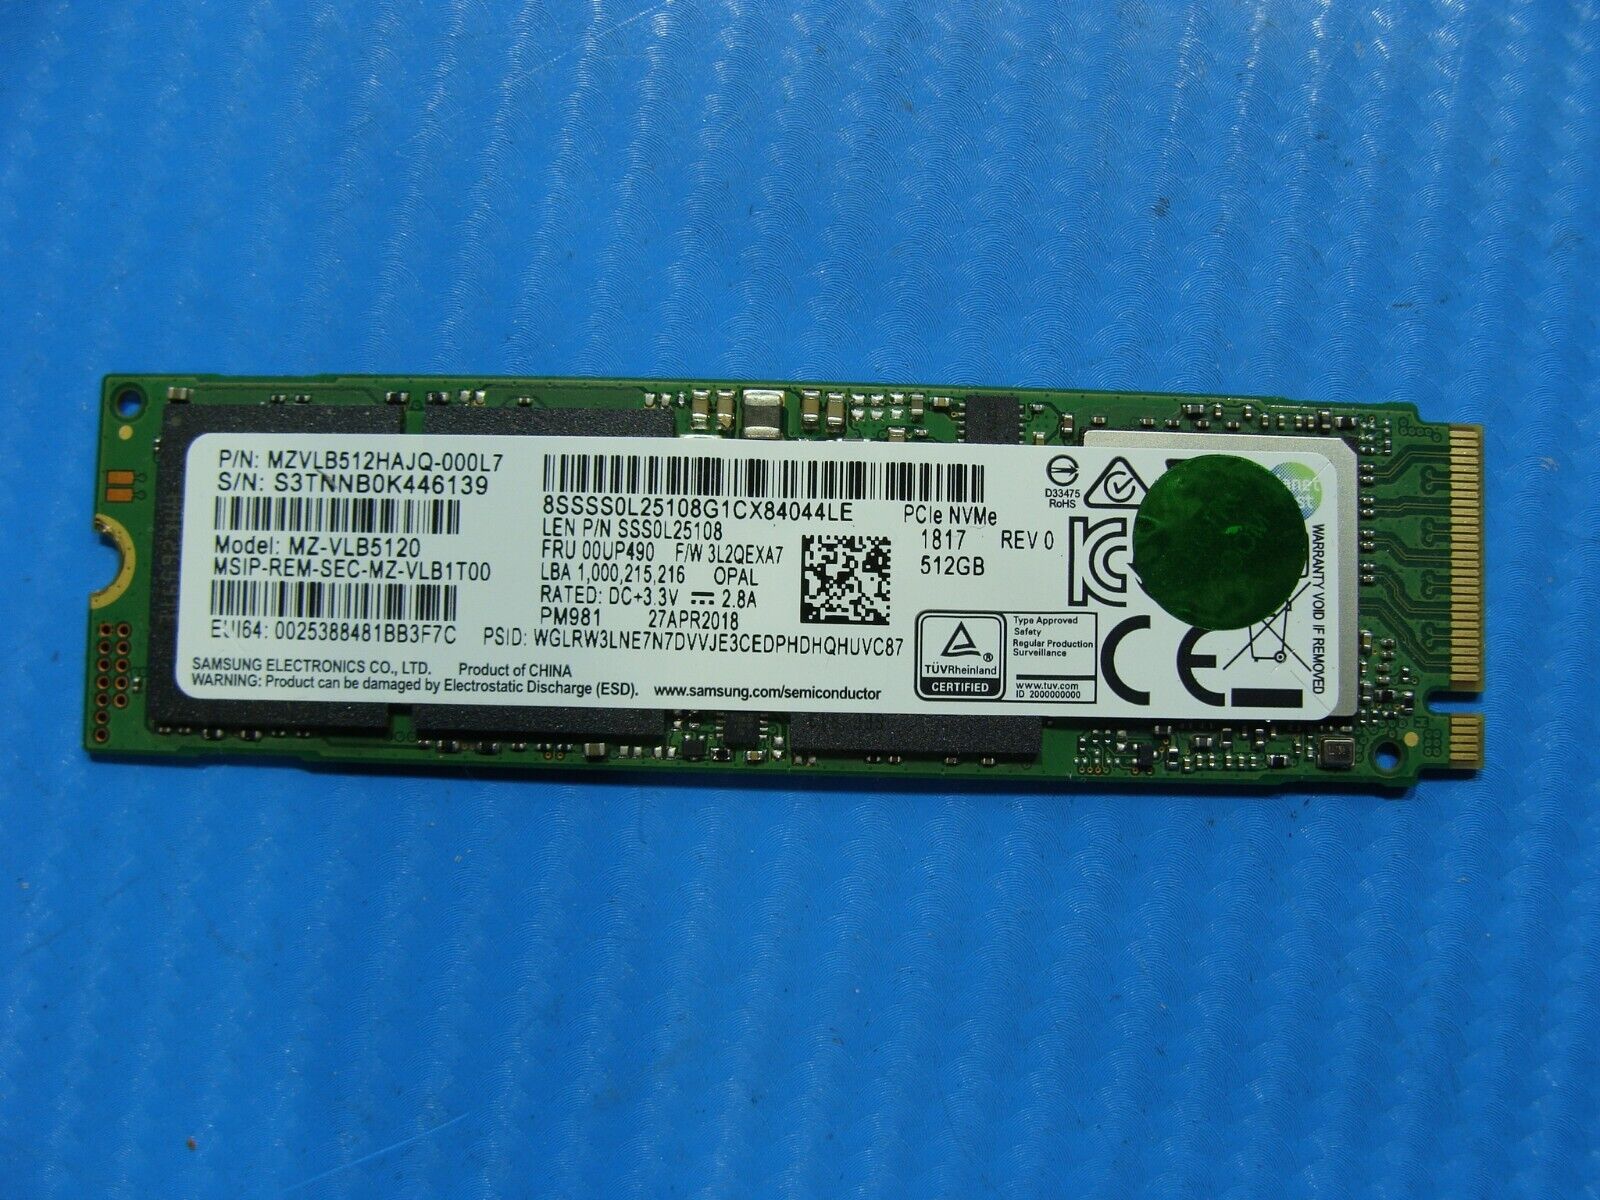 Lenovo T570 Samsung 512GB NVMe M.2 SSD Solid State Drive MZVLB512HAJQ-000L7